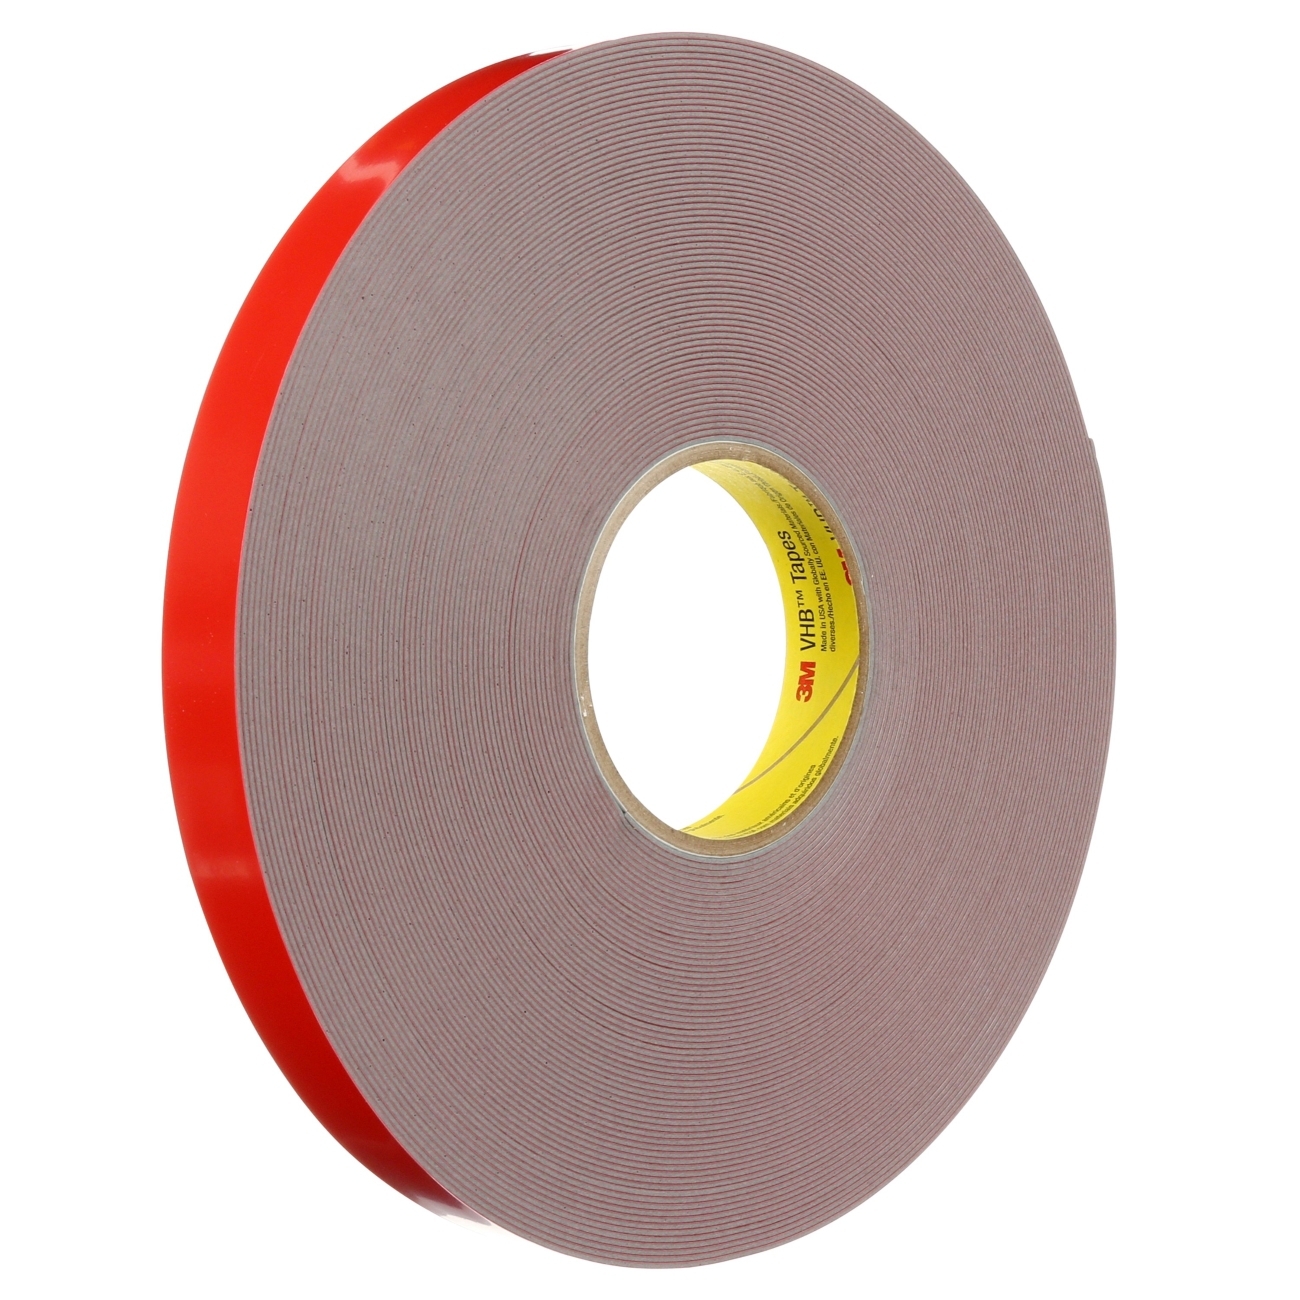 3M VHB adhesive tape 4991F, gray, 15 mm x 16.5 m, 2.3 mm